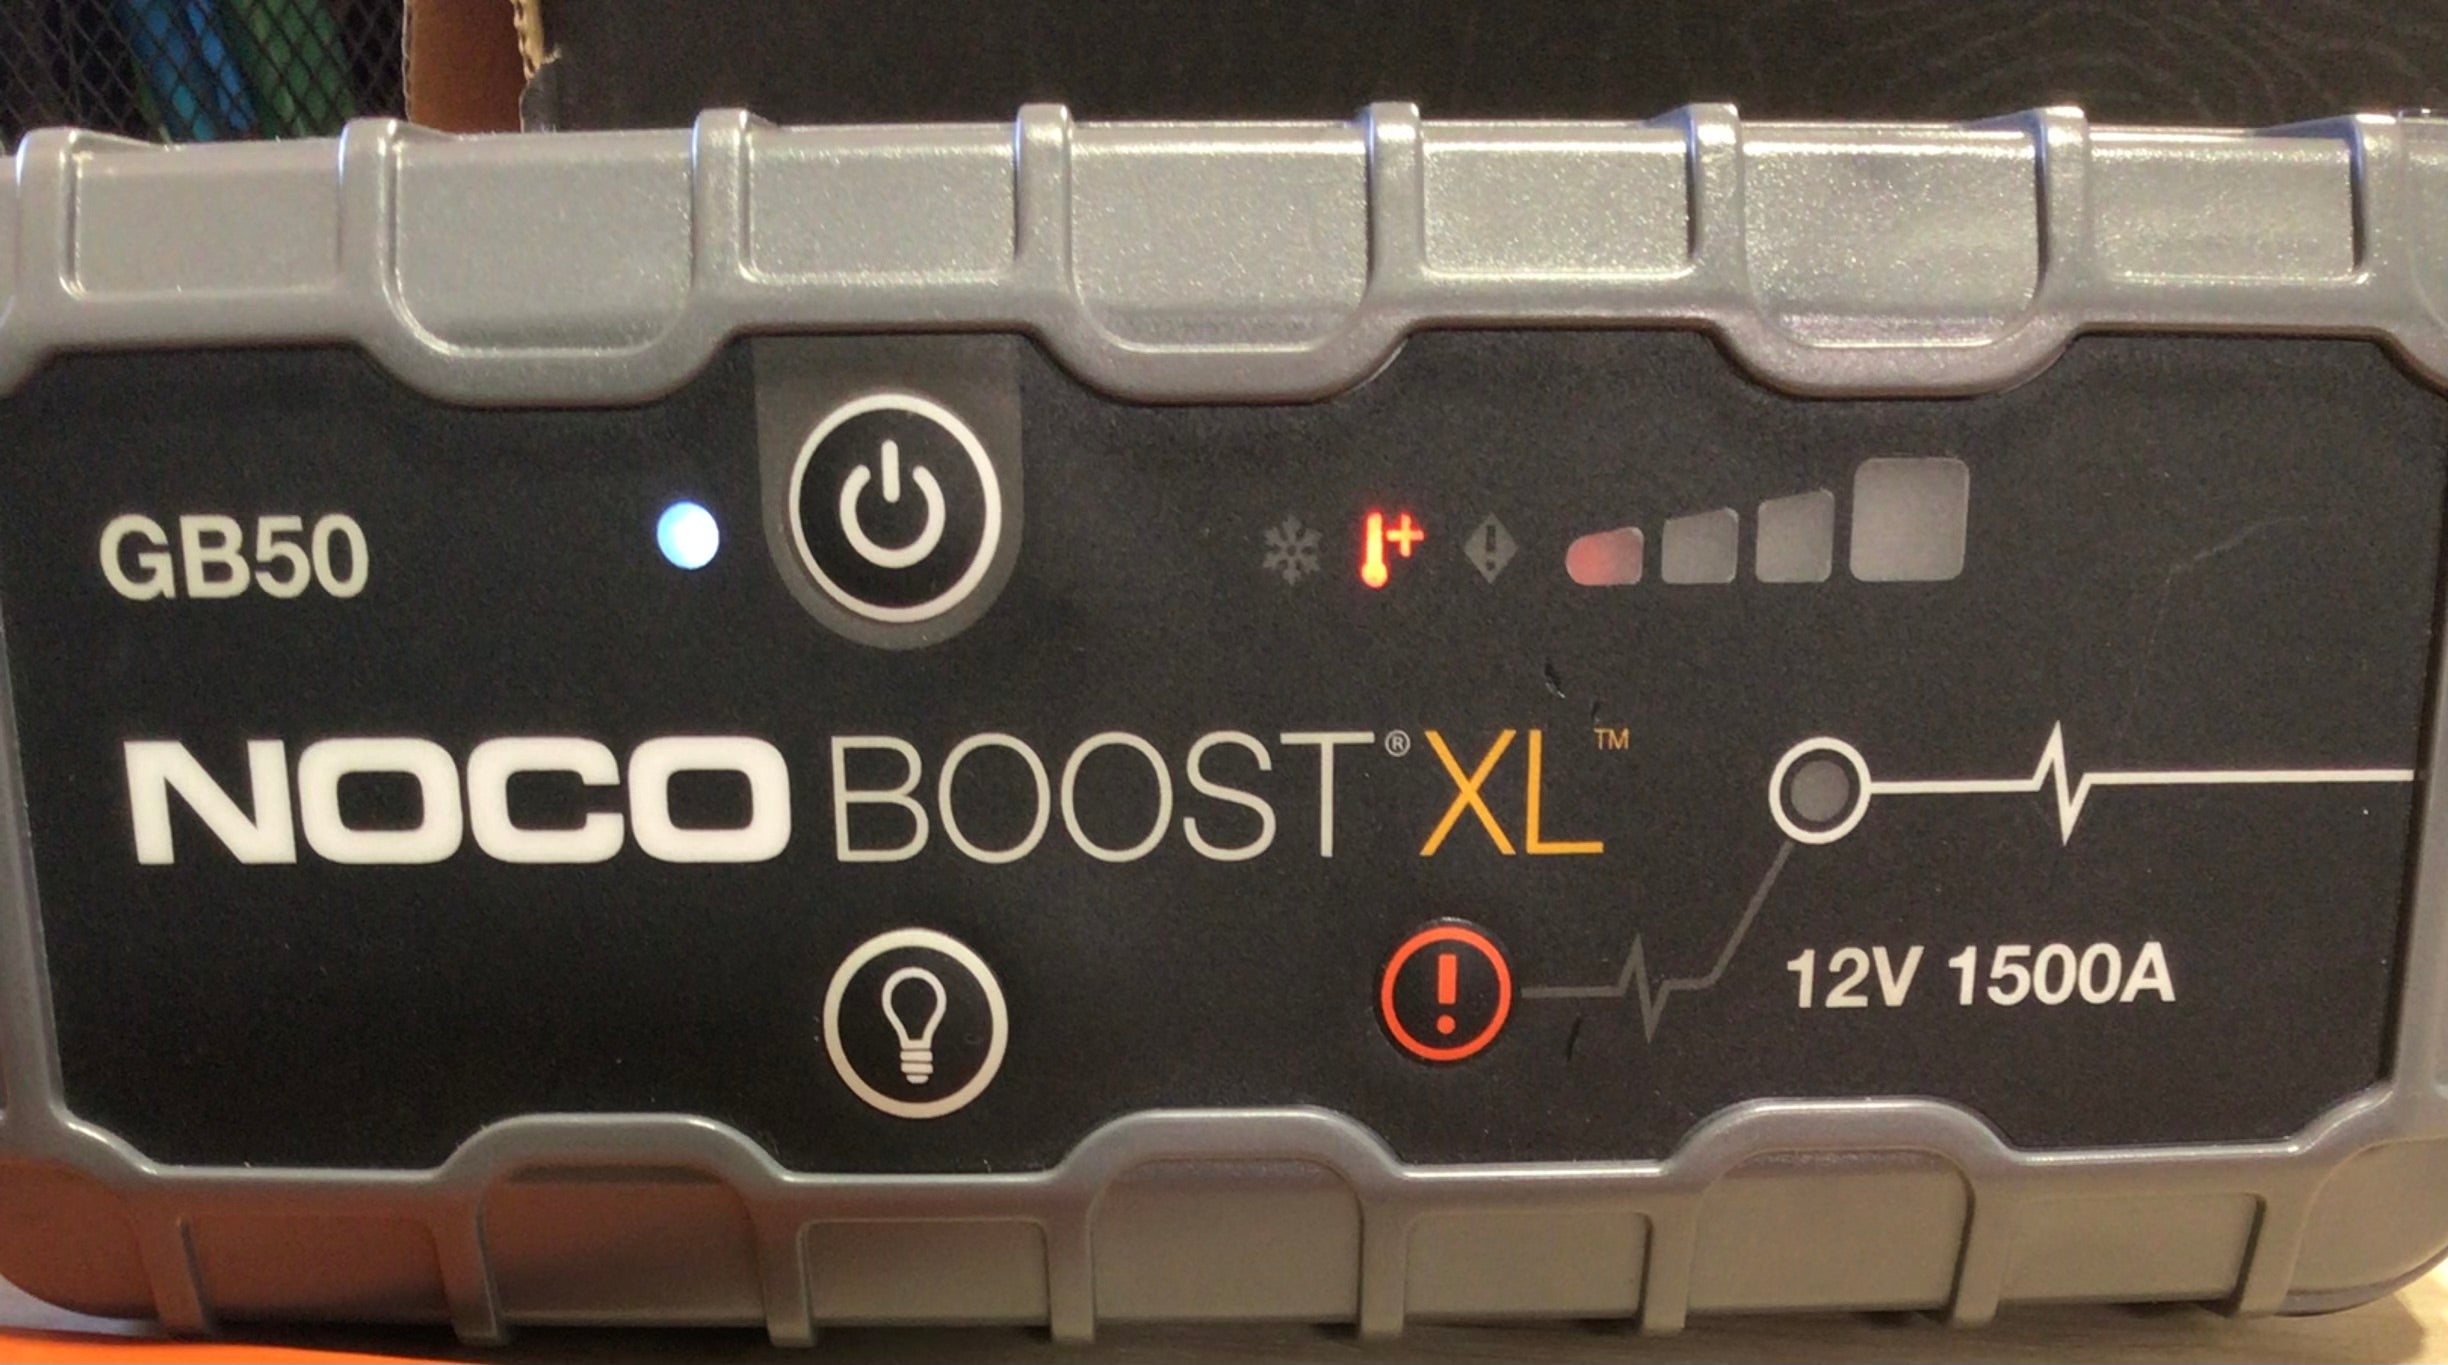 NOCO Boost XL GB50 1500 Amp 12-Volt UltraSafe Lithium Jump Starter Box *Tested* (7776221462766)